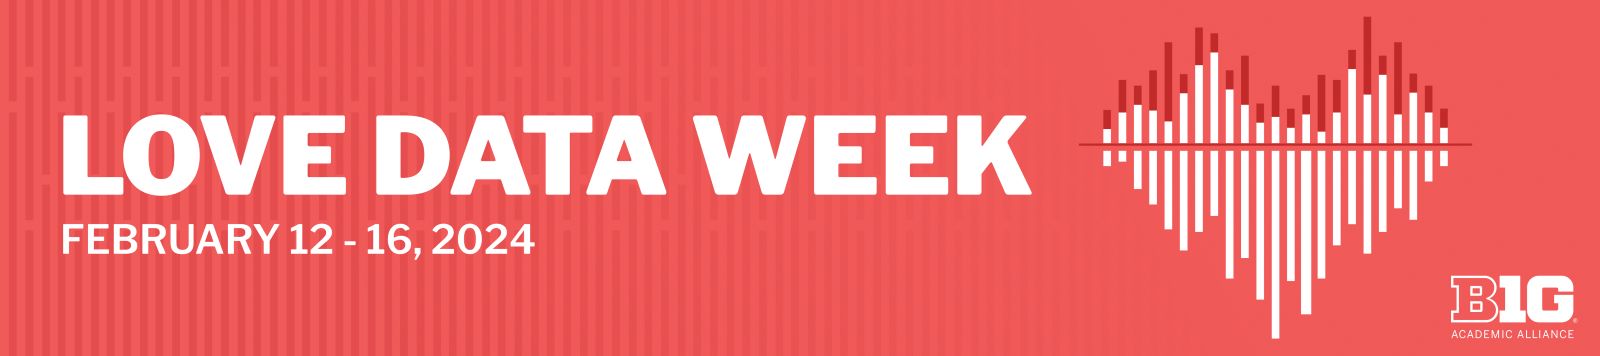 Love Data Week Banner